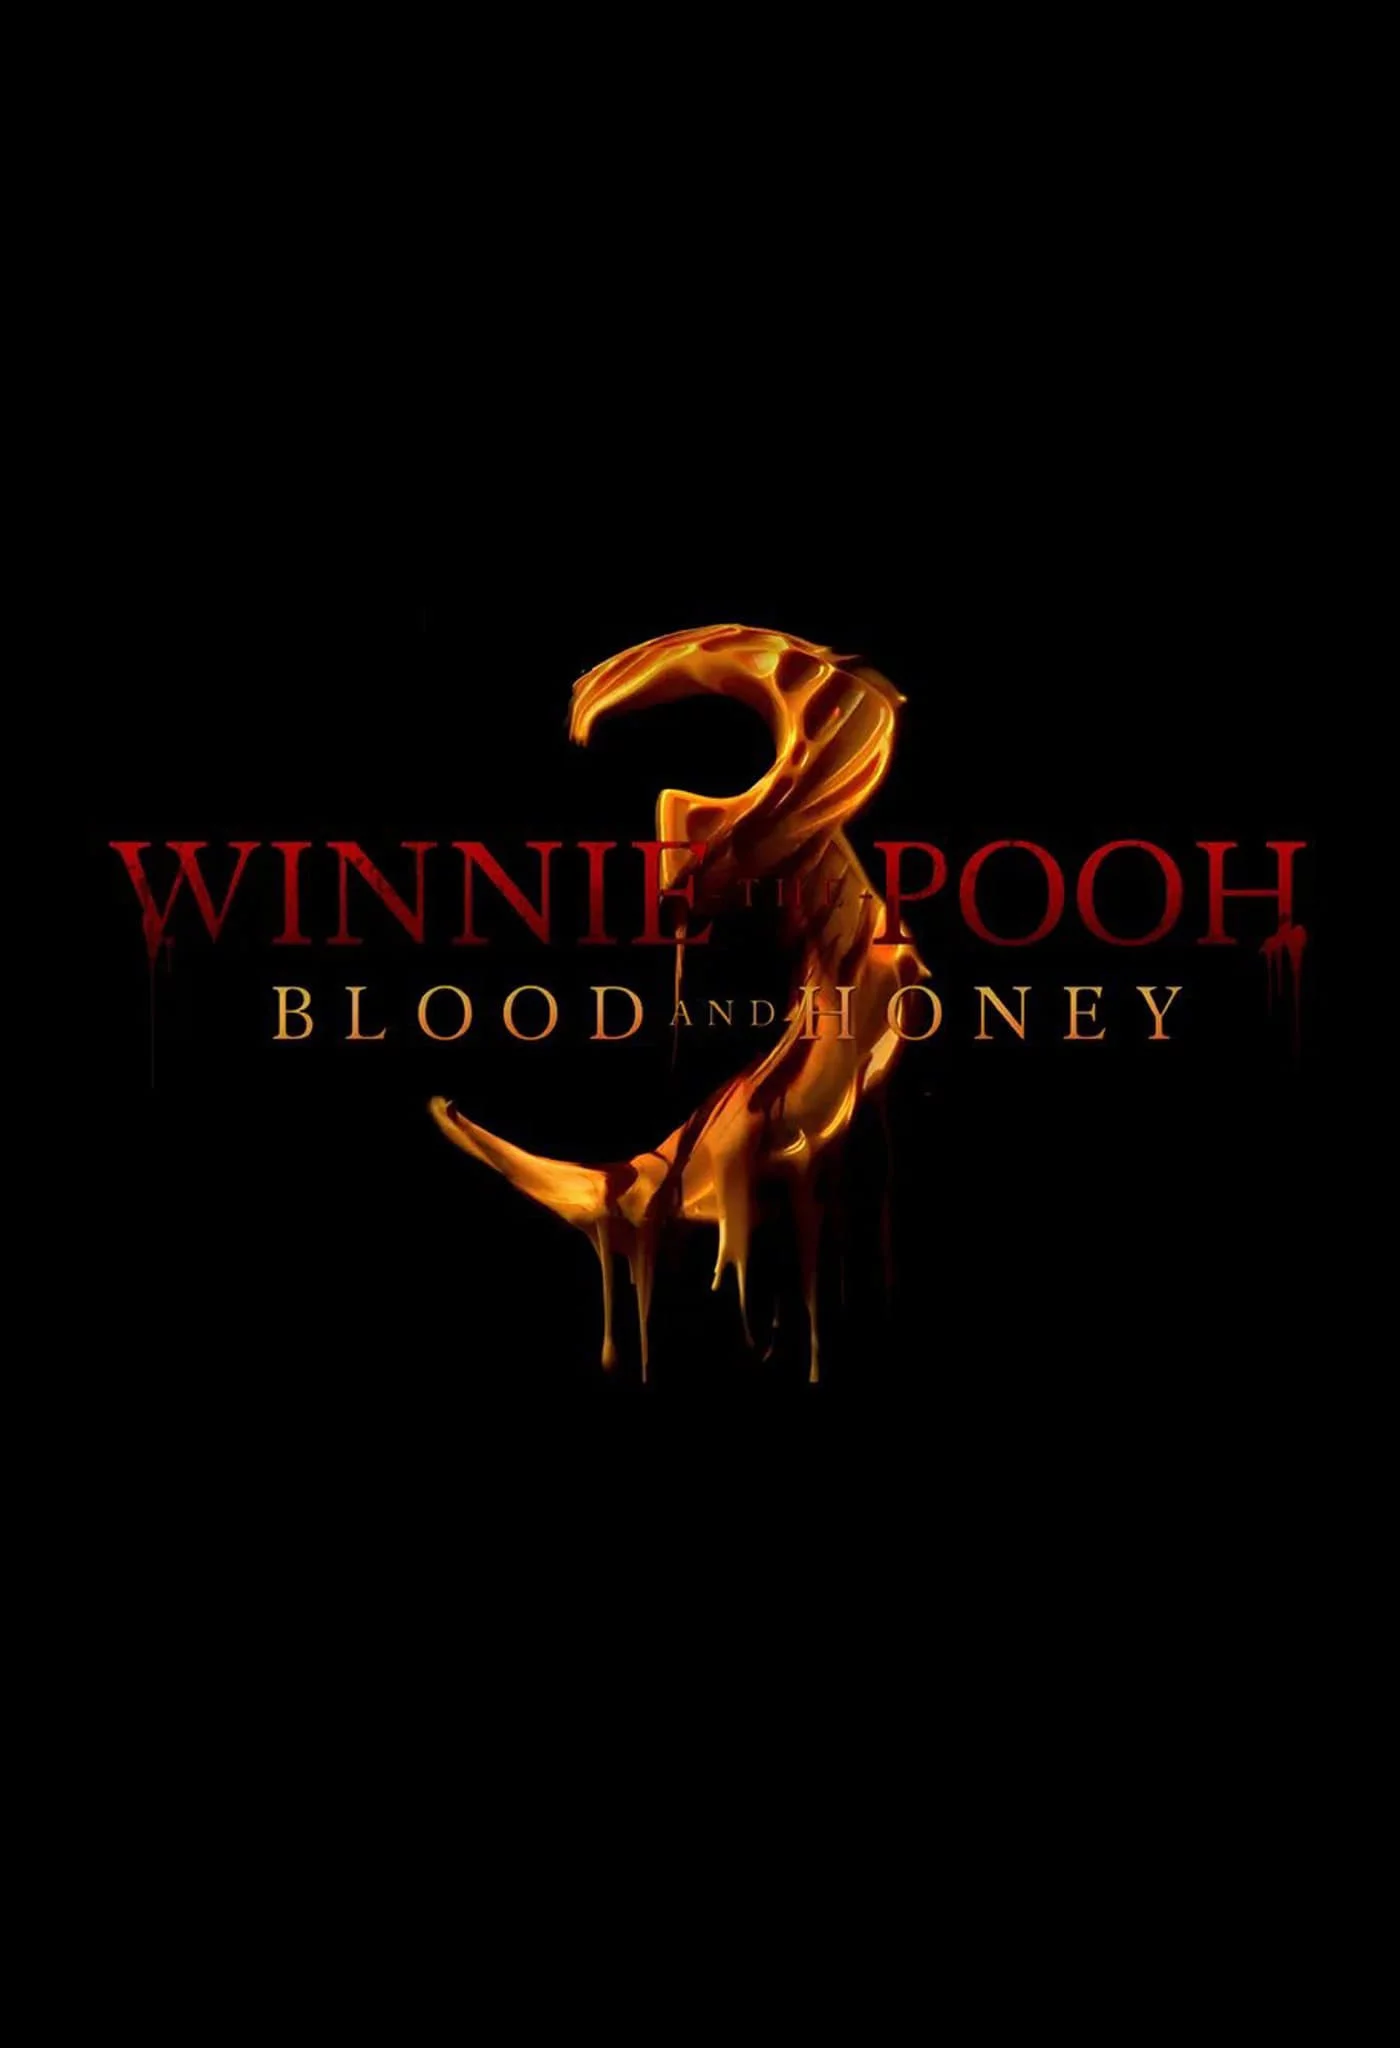 Photo 4 du film : Winnie the Pooh: Blood and Honey 3